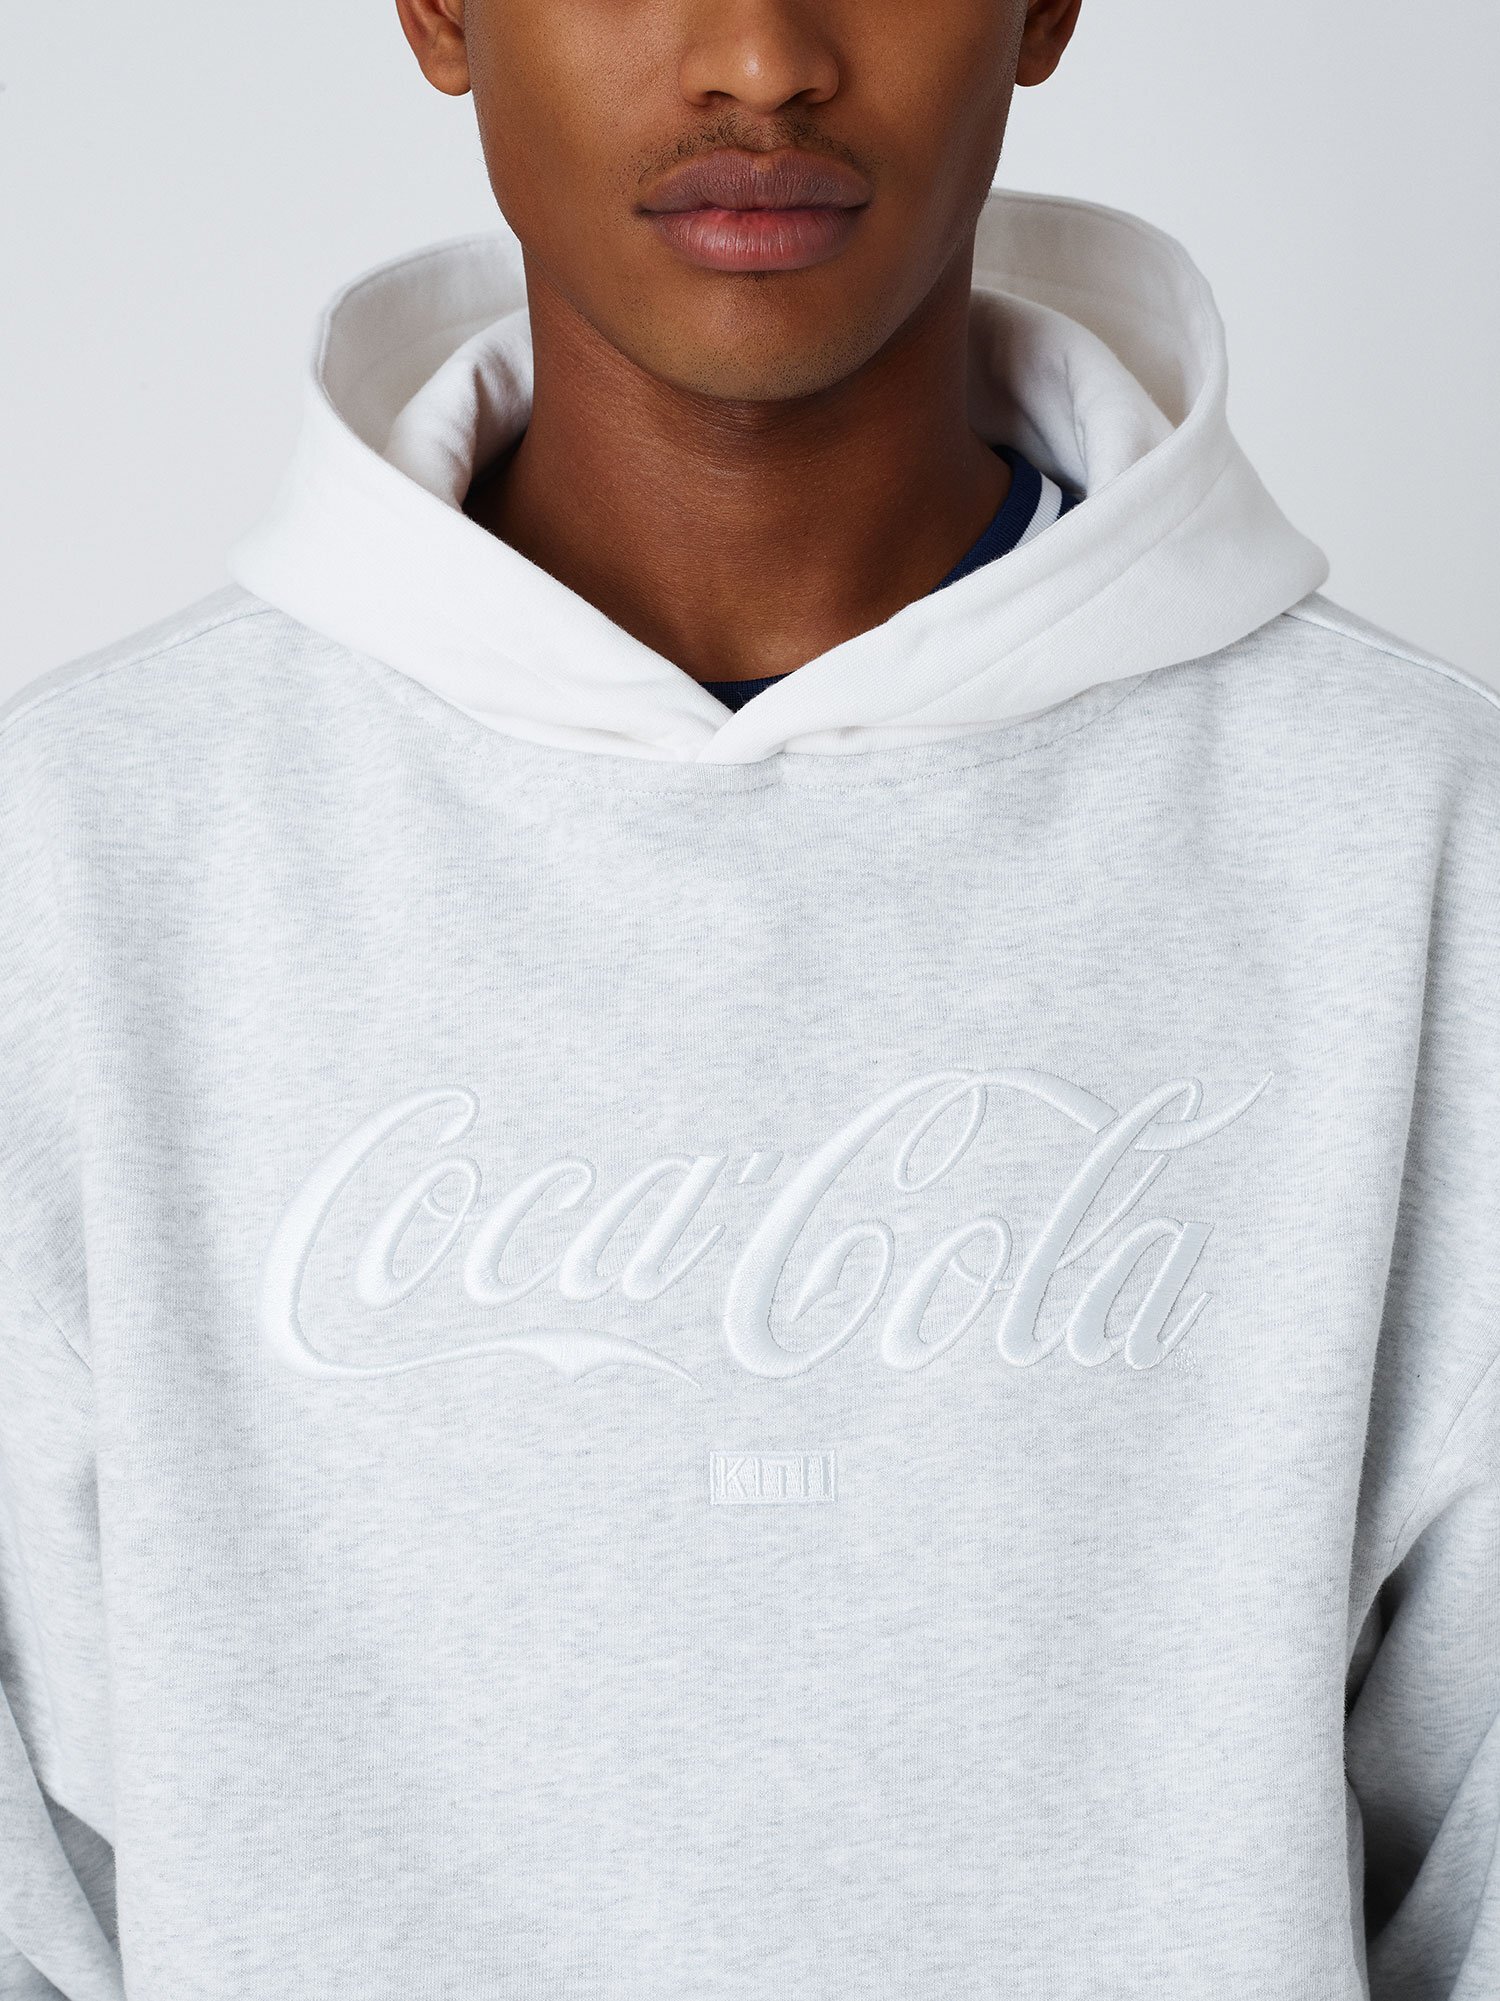 coke kith - 1.jpg